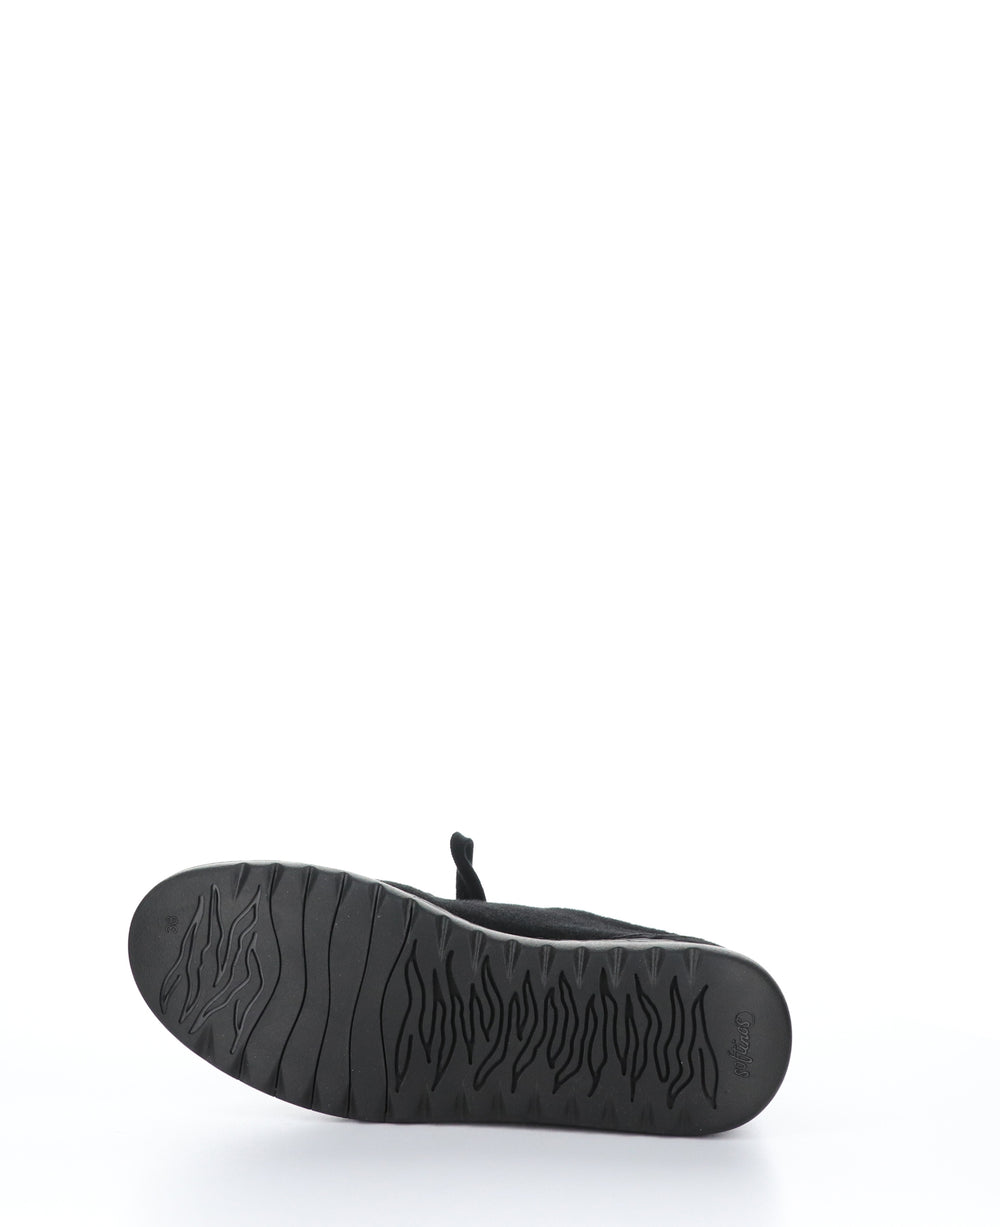 ELRA670SOF Black Round Toe Shoes